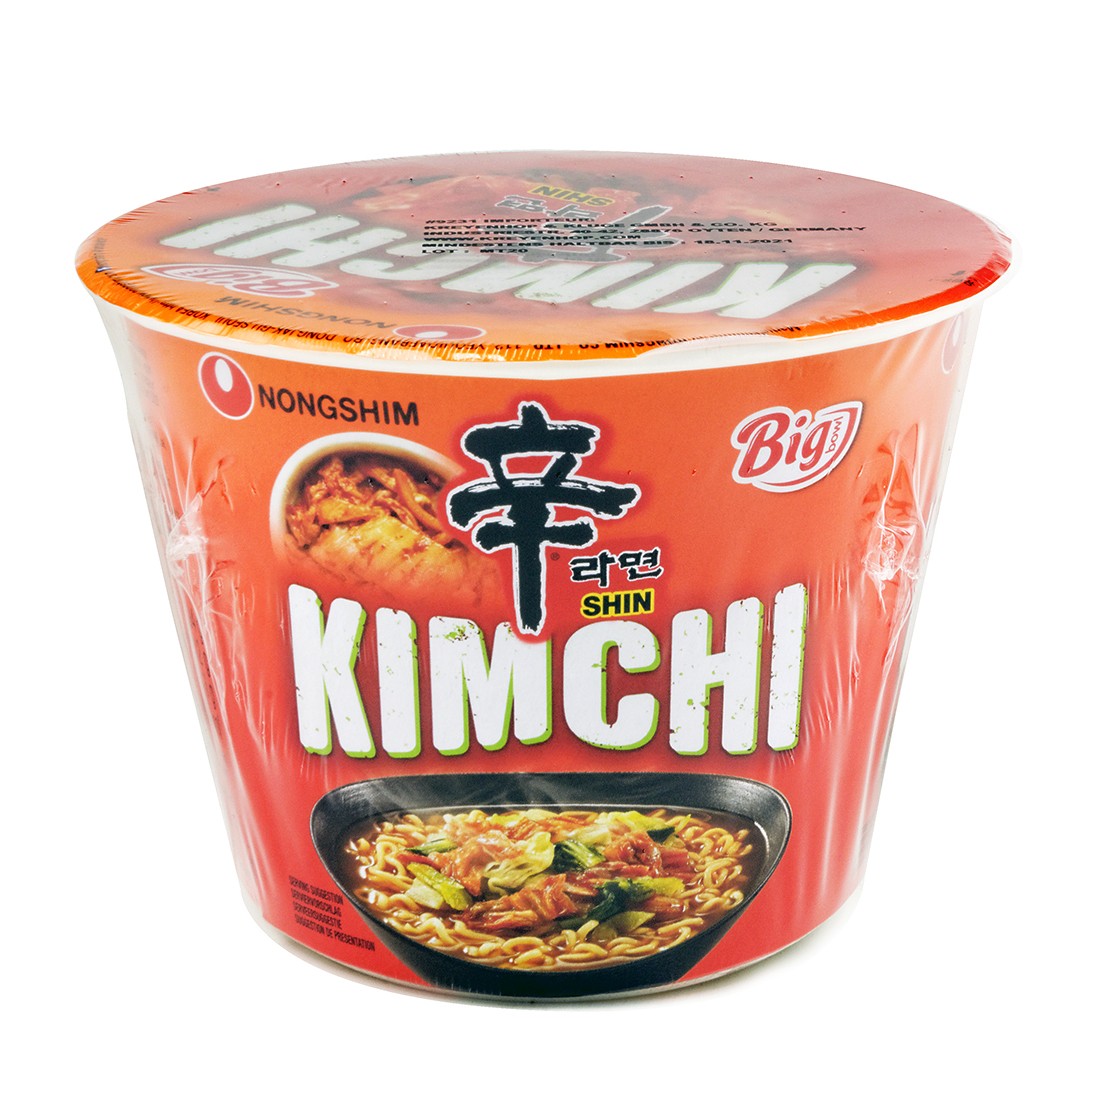 Supe instant la CUP/BOWL - Supa instant Kimchi Big Bowl NS 112g, asianfood.ro